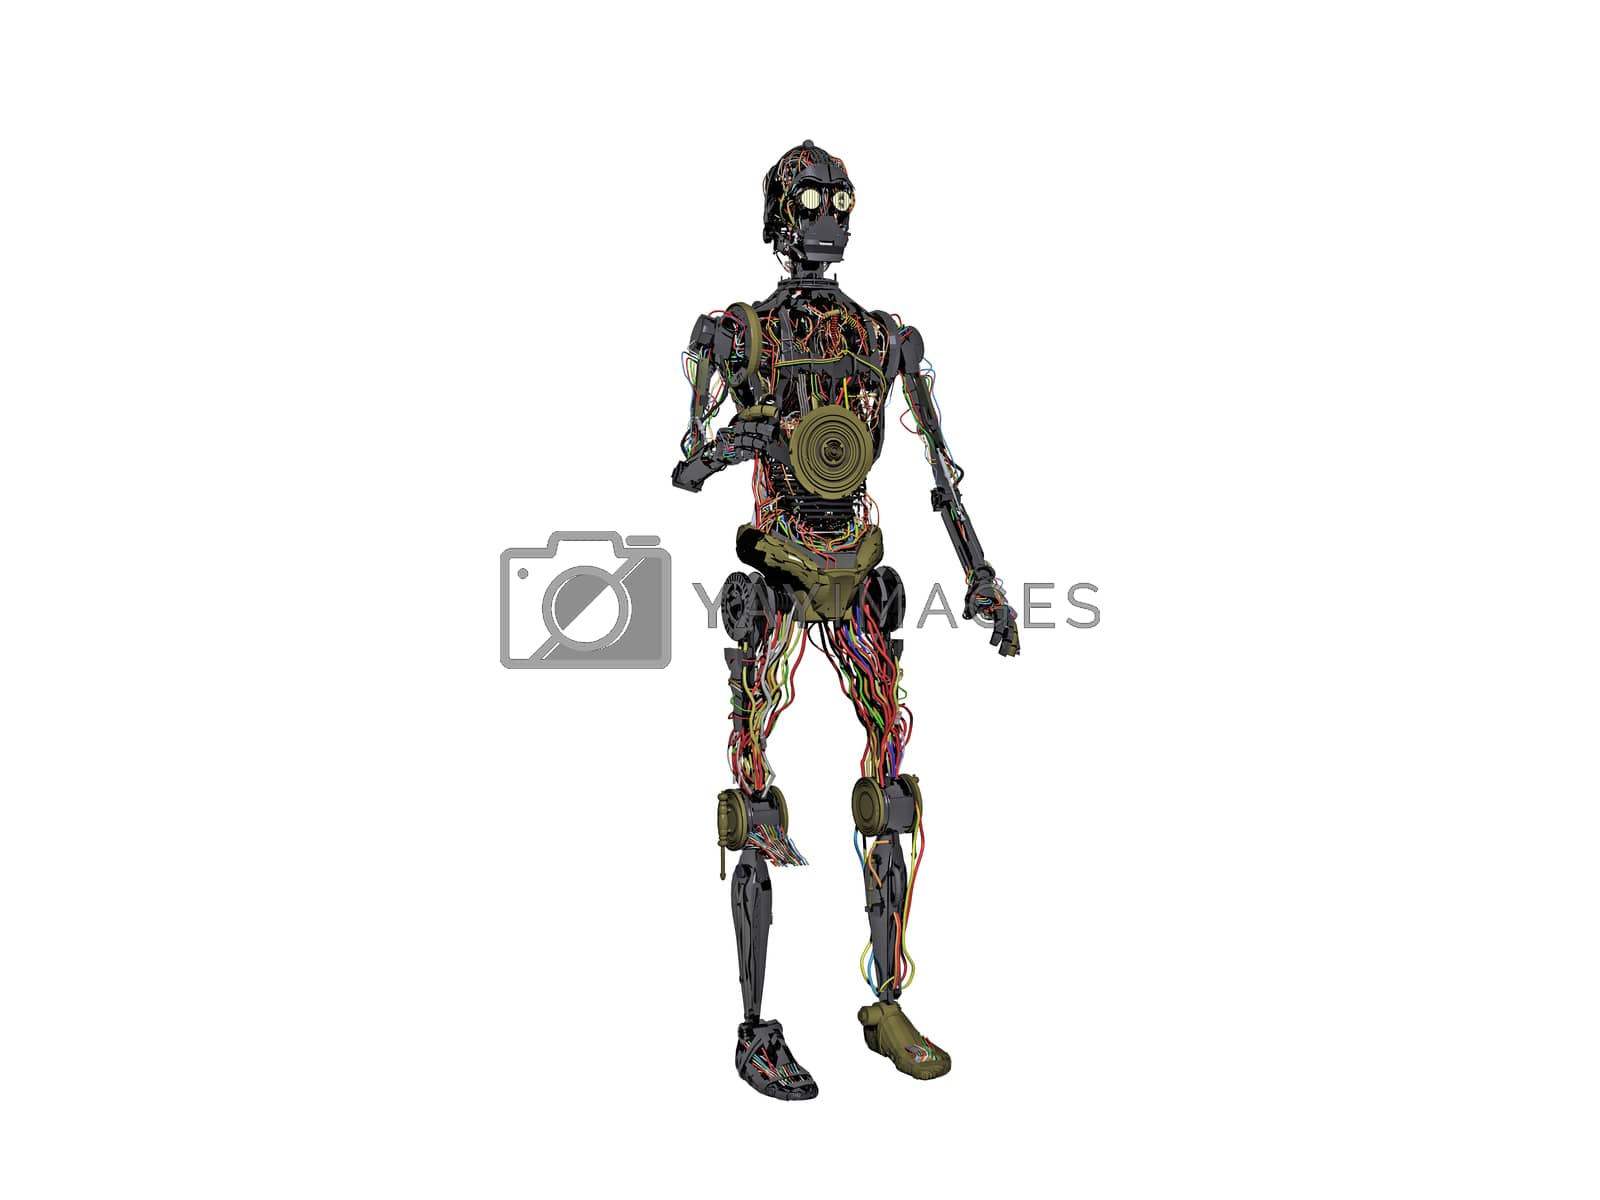 Royalty free image of big heavy metallic humanoid robot by Dr-Lange